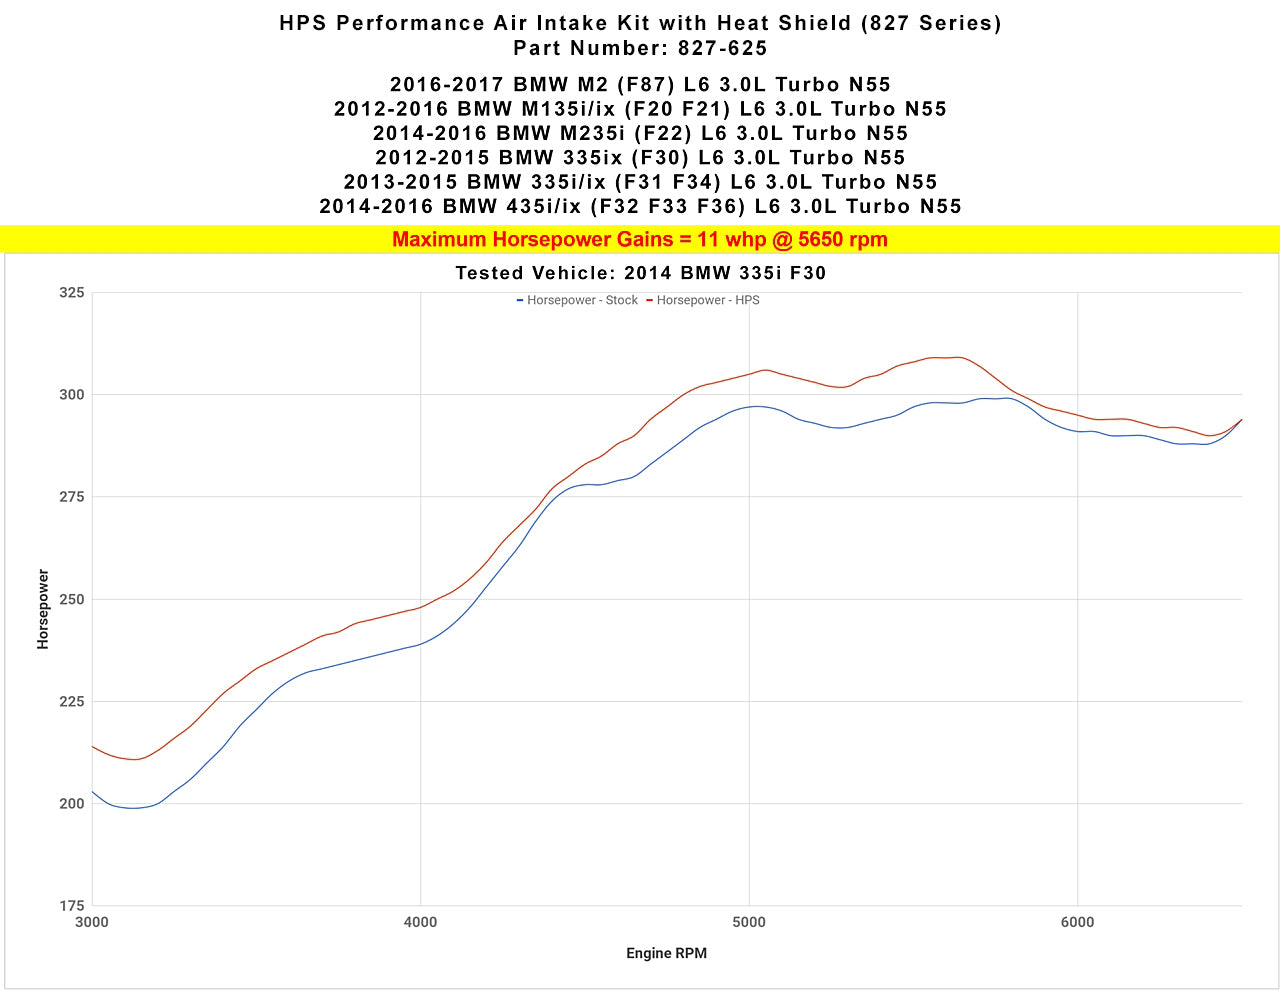 Dyno proven gains 11 whp HPS Performance Shortram Air Intake Kit 2014-2016 BMW M235i F22 3.0L Turbo N55 827-625BL